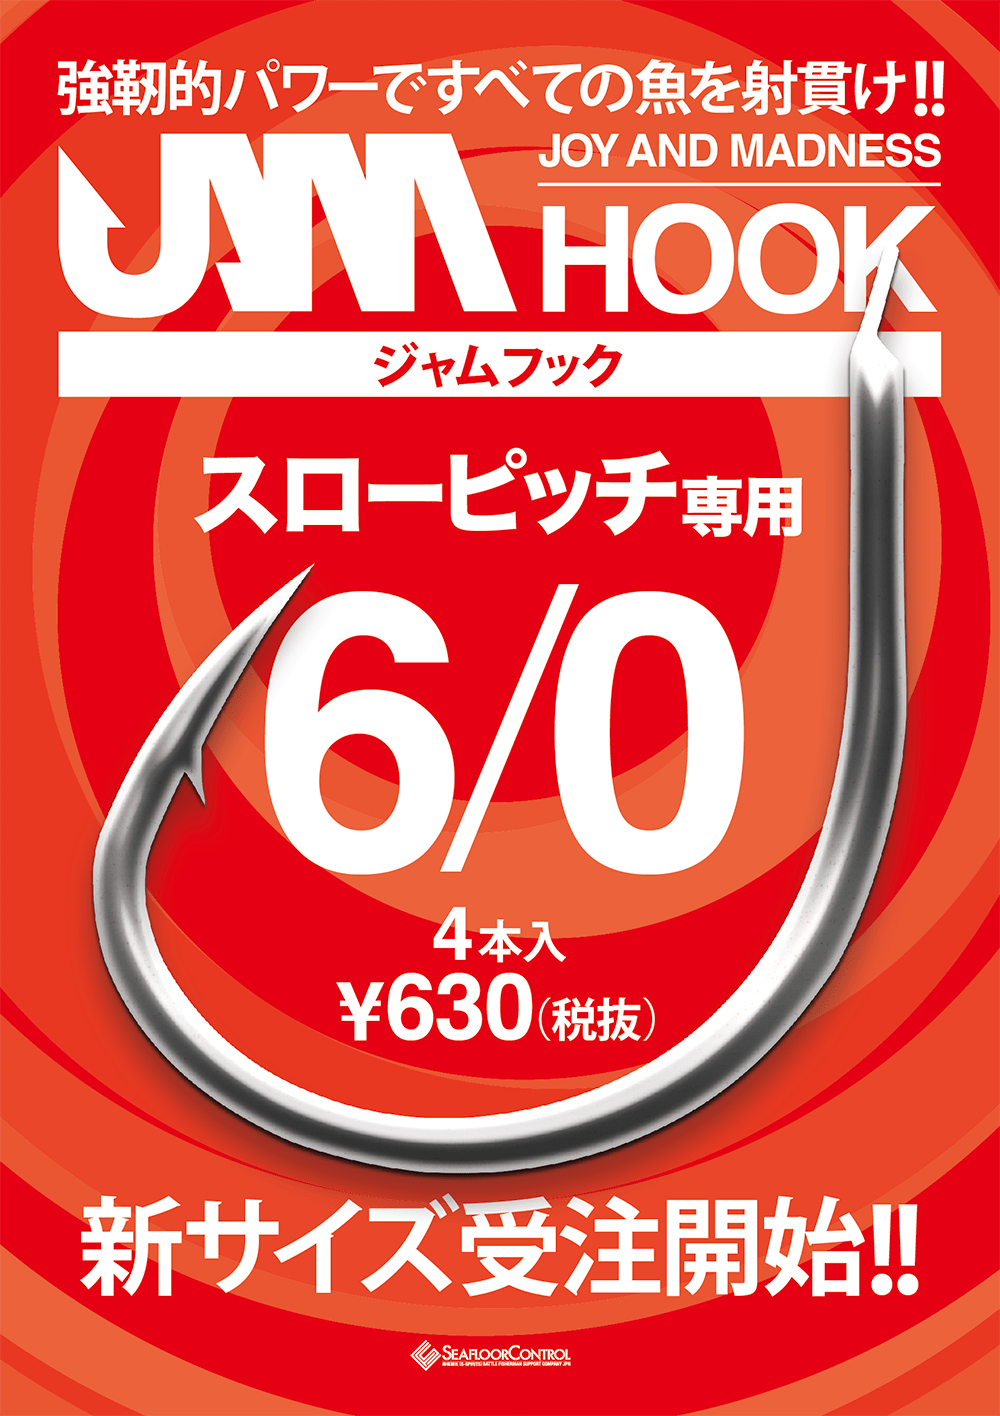 JAM HOOK 6/0 ジャムフック 6/0 受注開始 スローピッチ専用